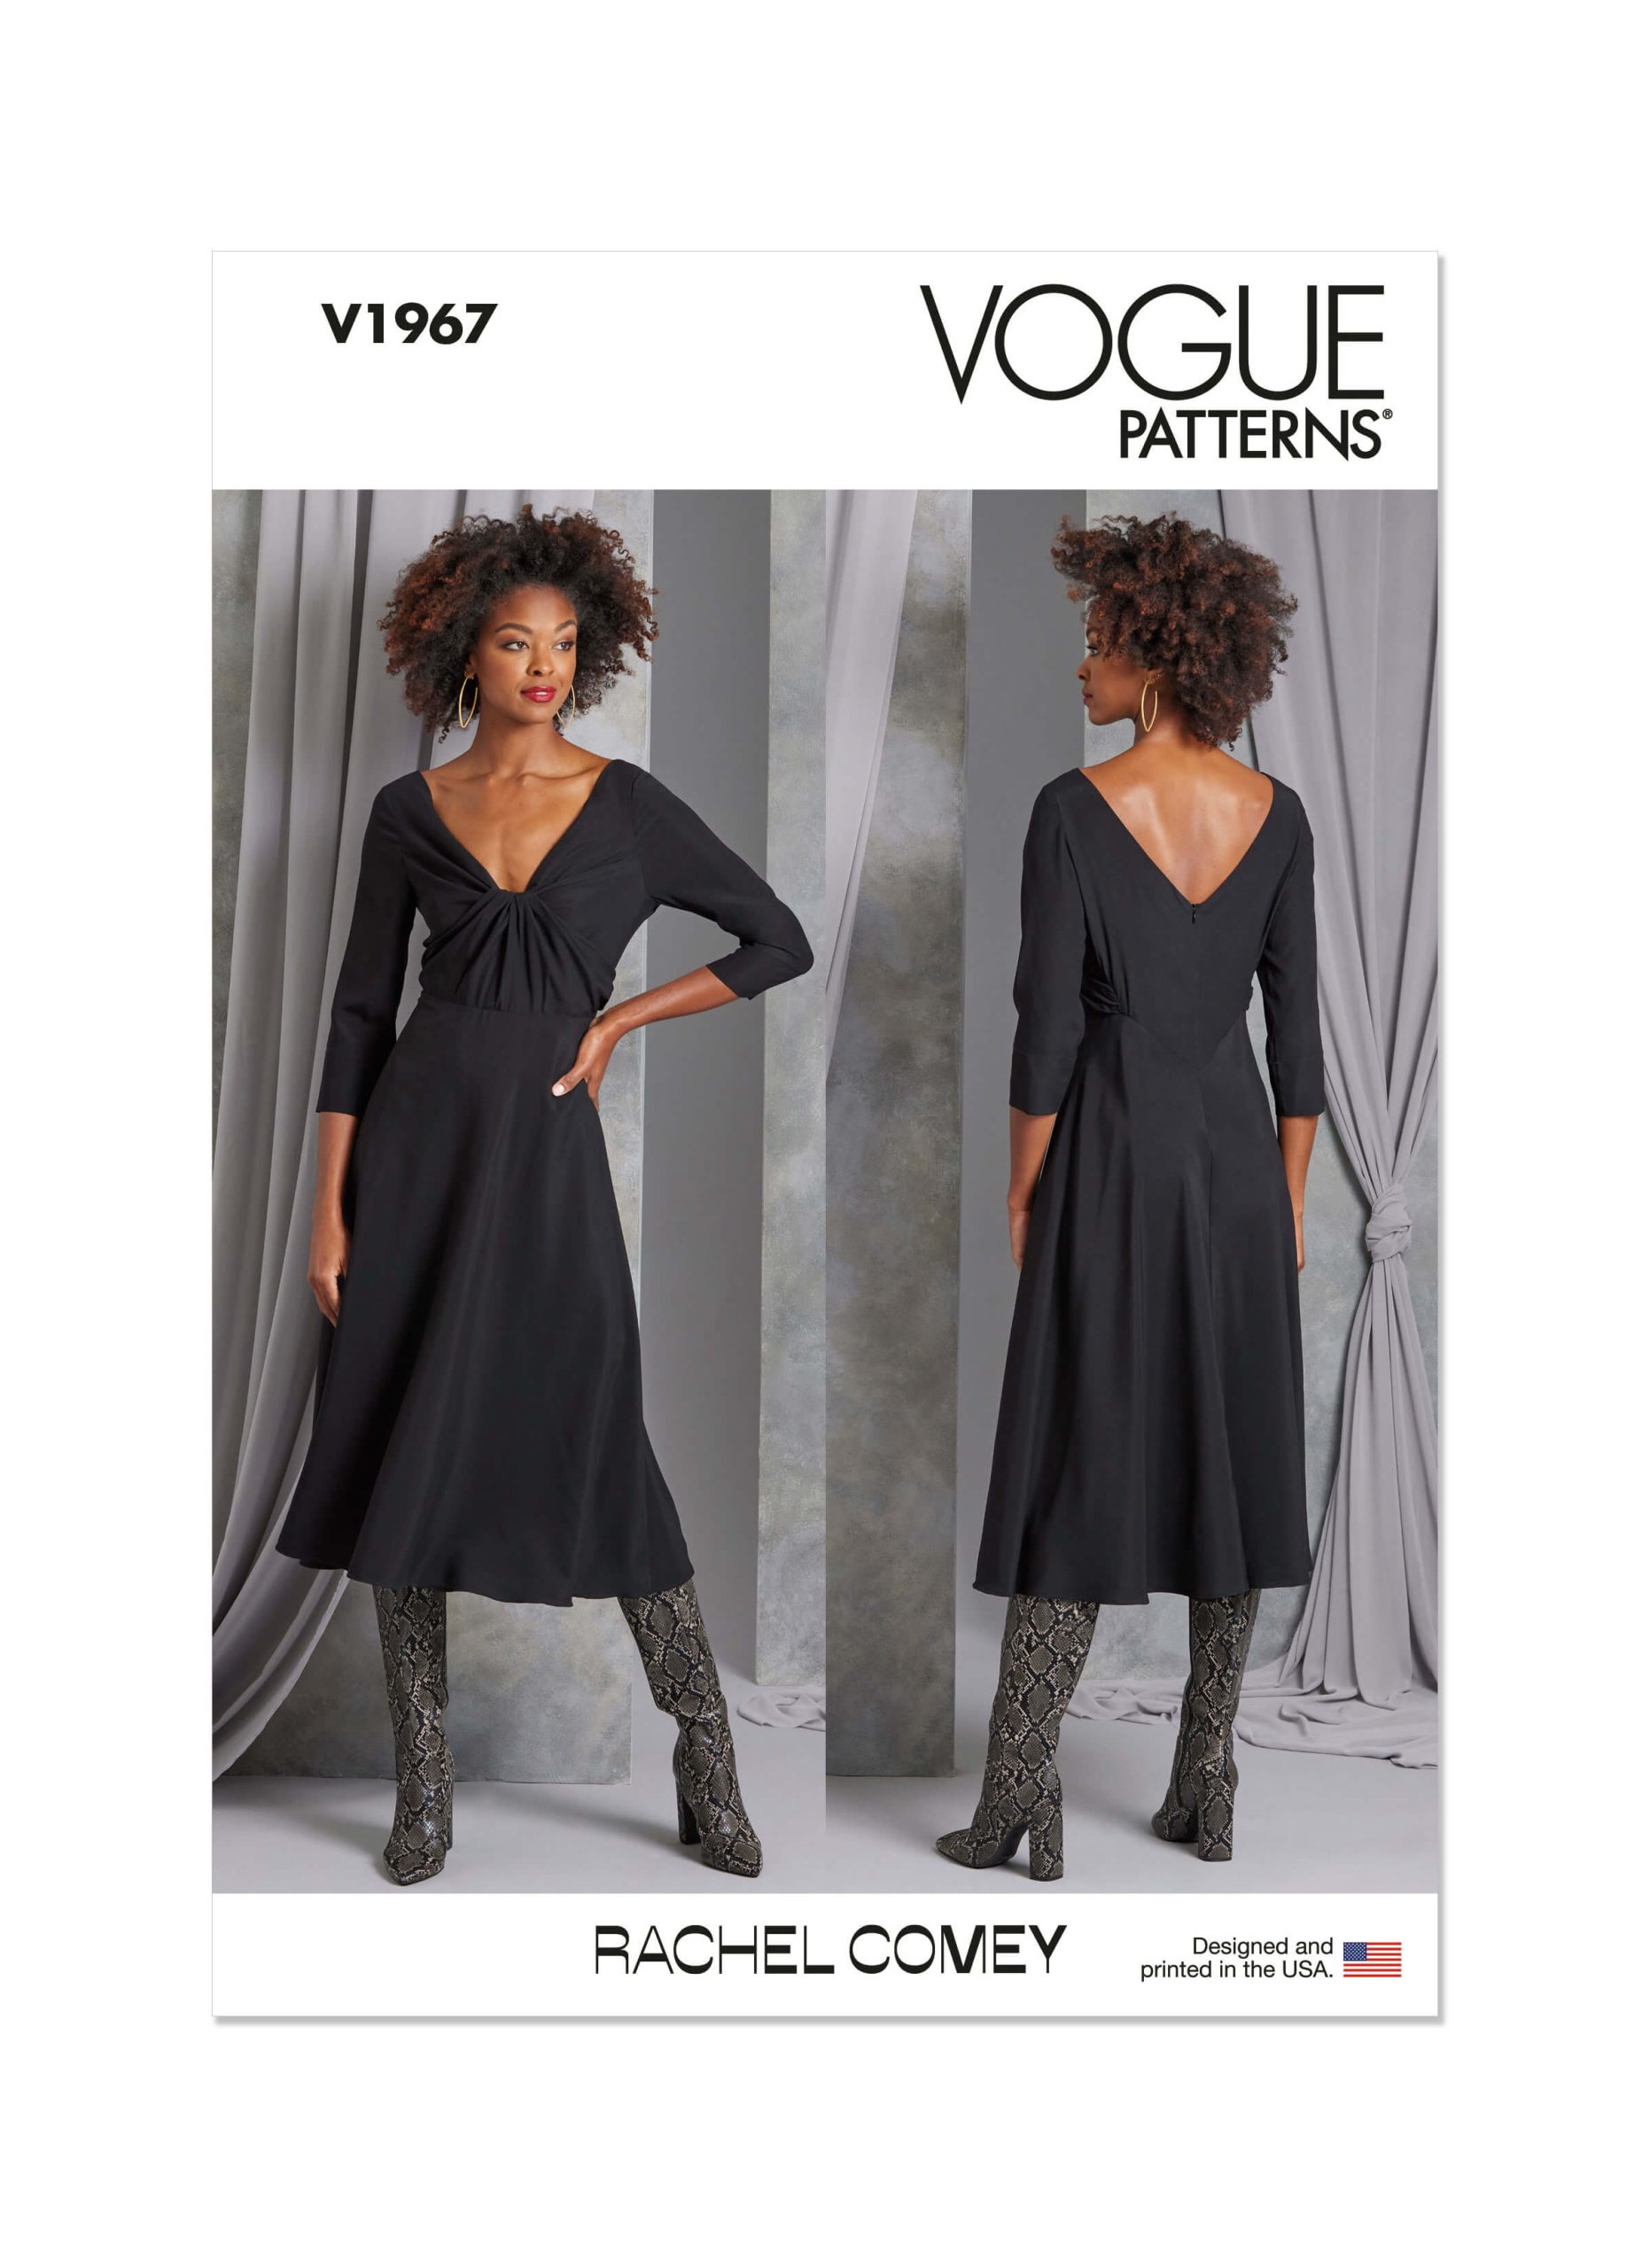 Vogue Patterns V1967 Misses' Dress by Rachel Comey